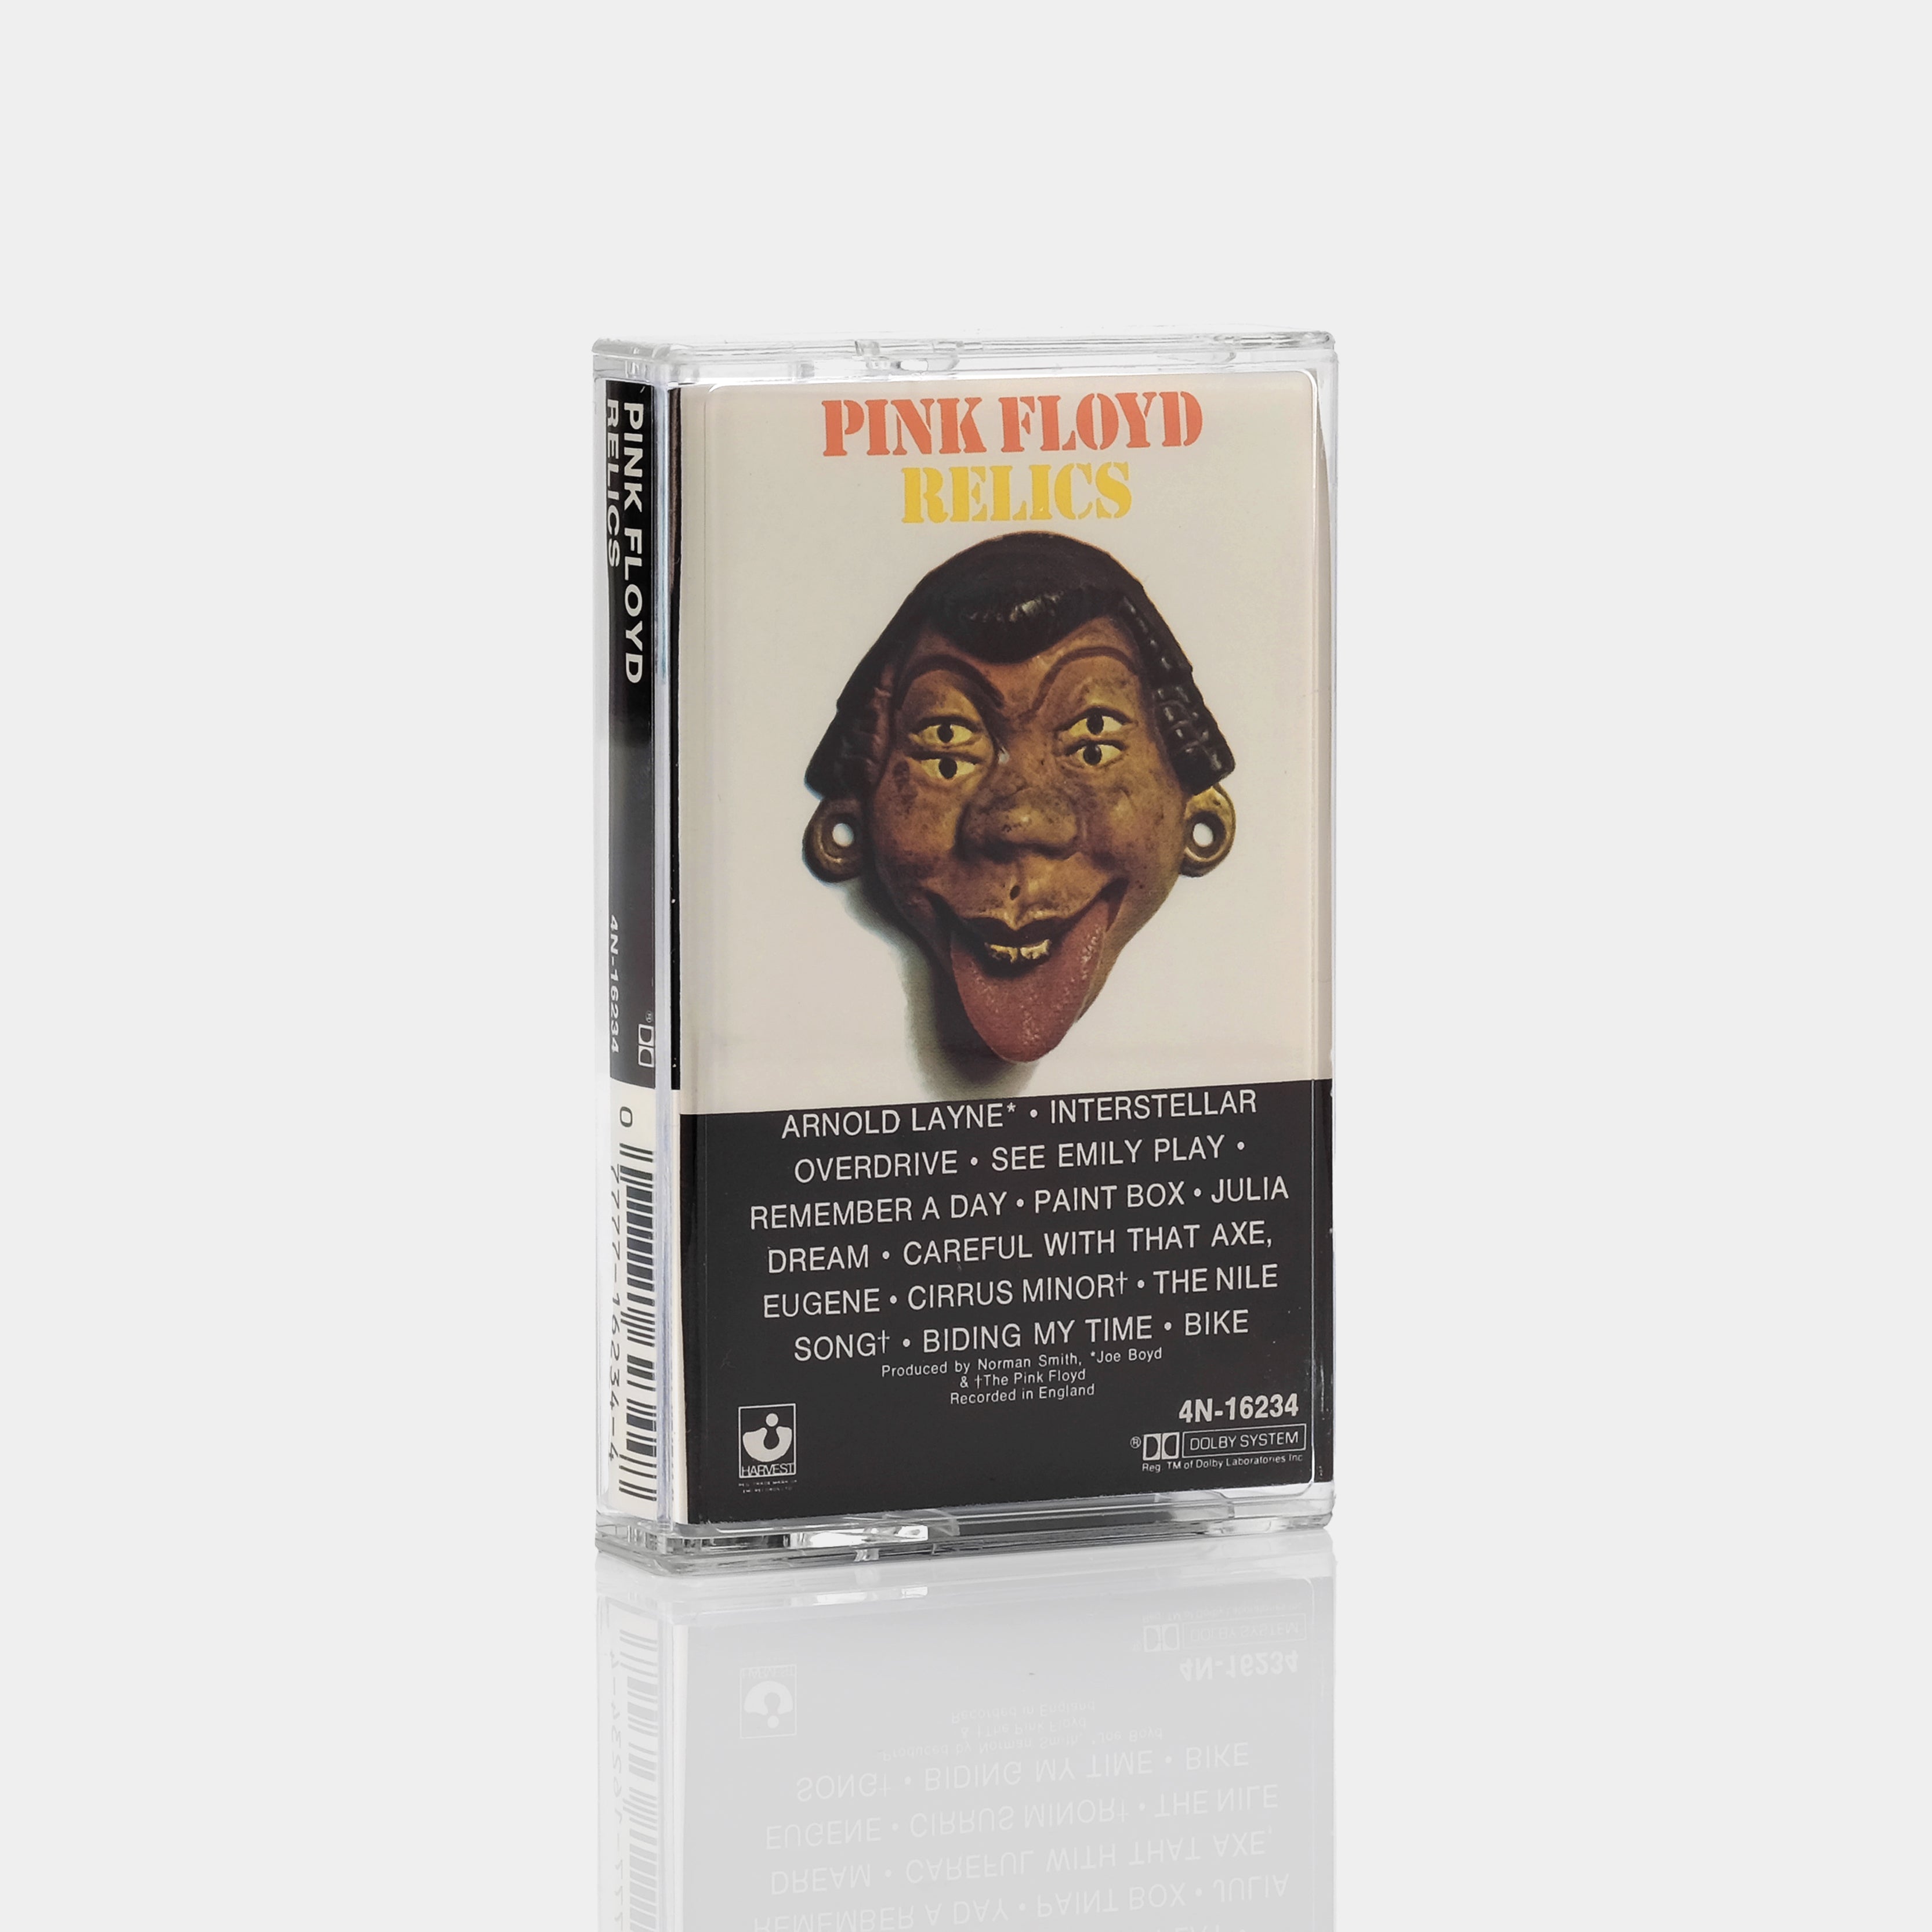 Pink Floyd find today #pinkfloyd #cassettetapes #vintageaudio